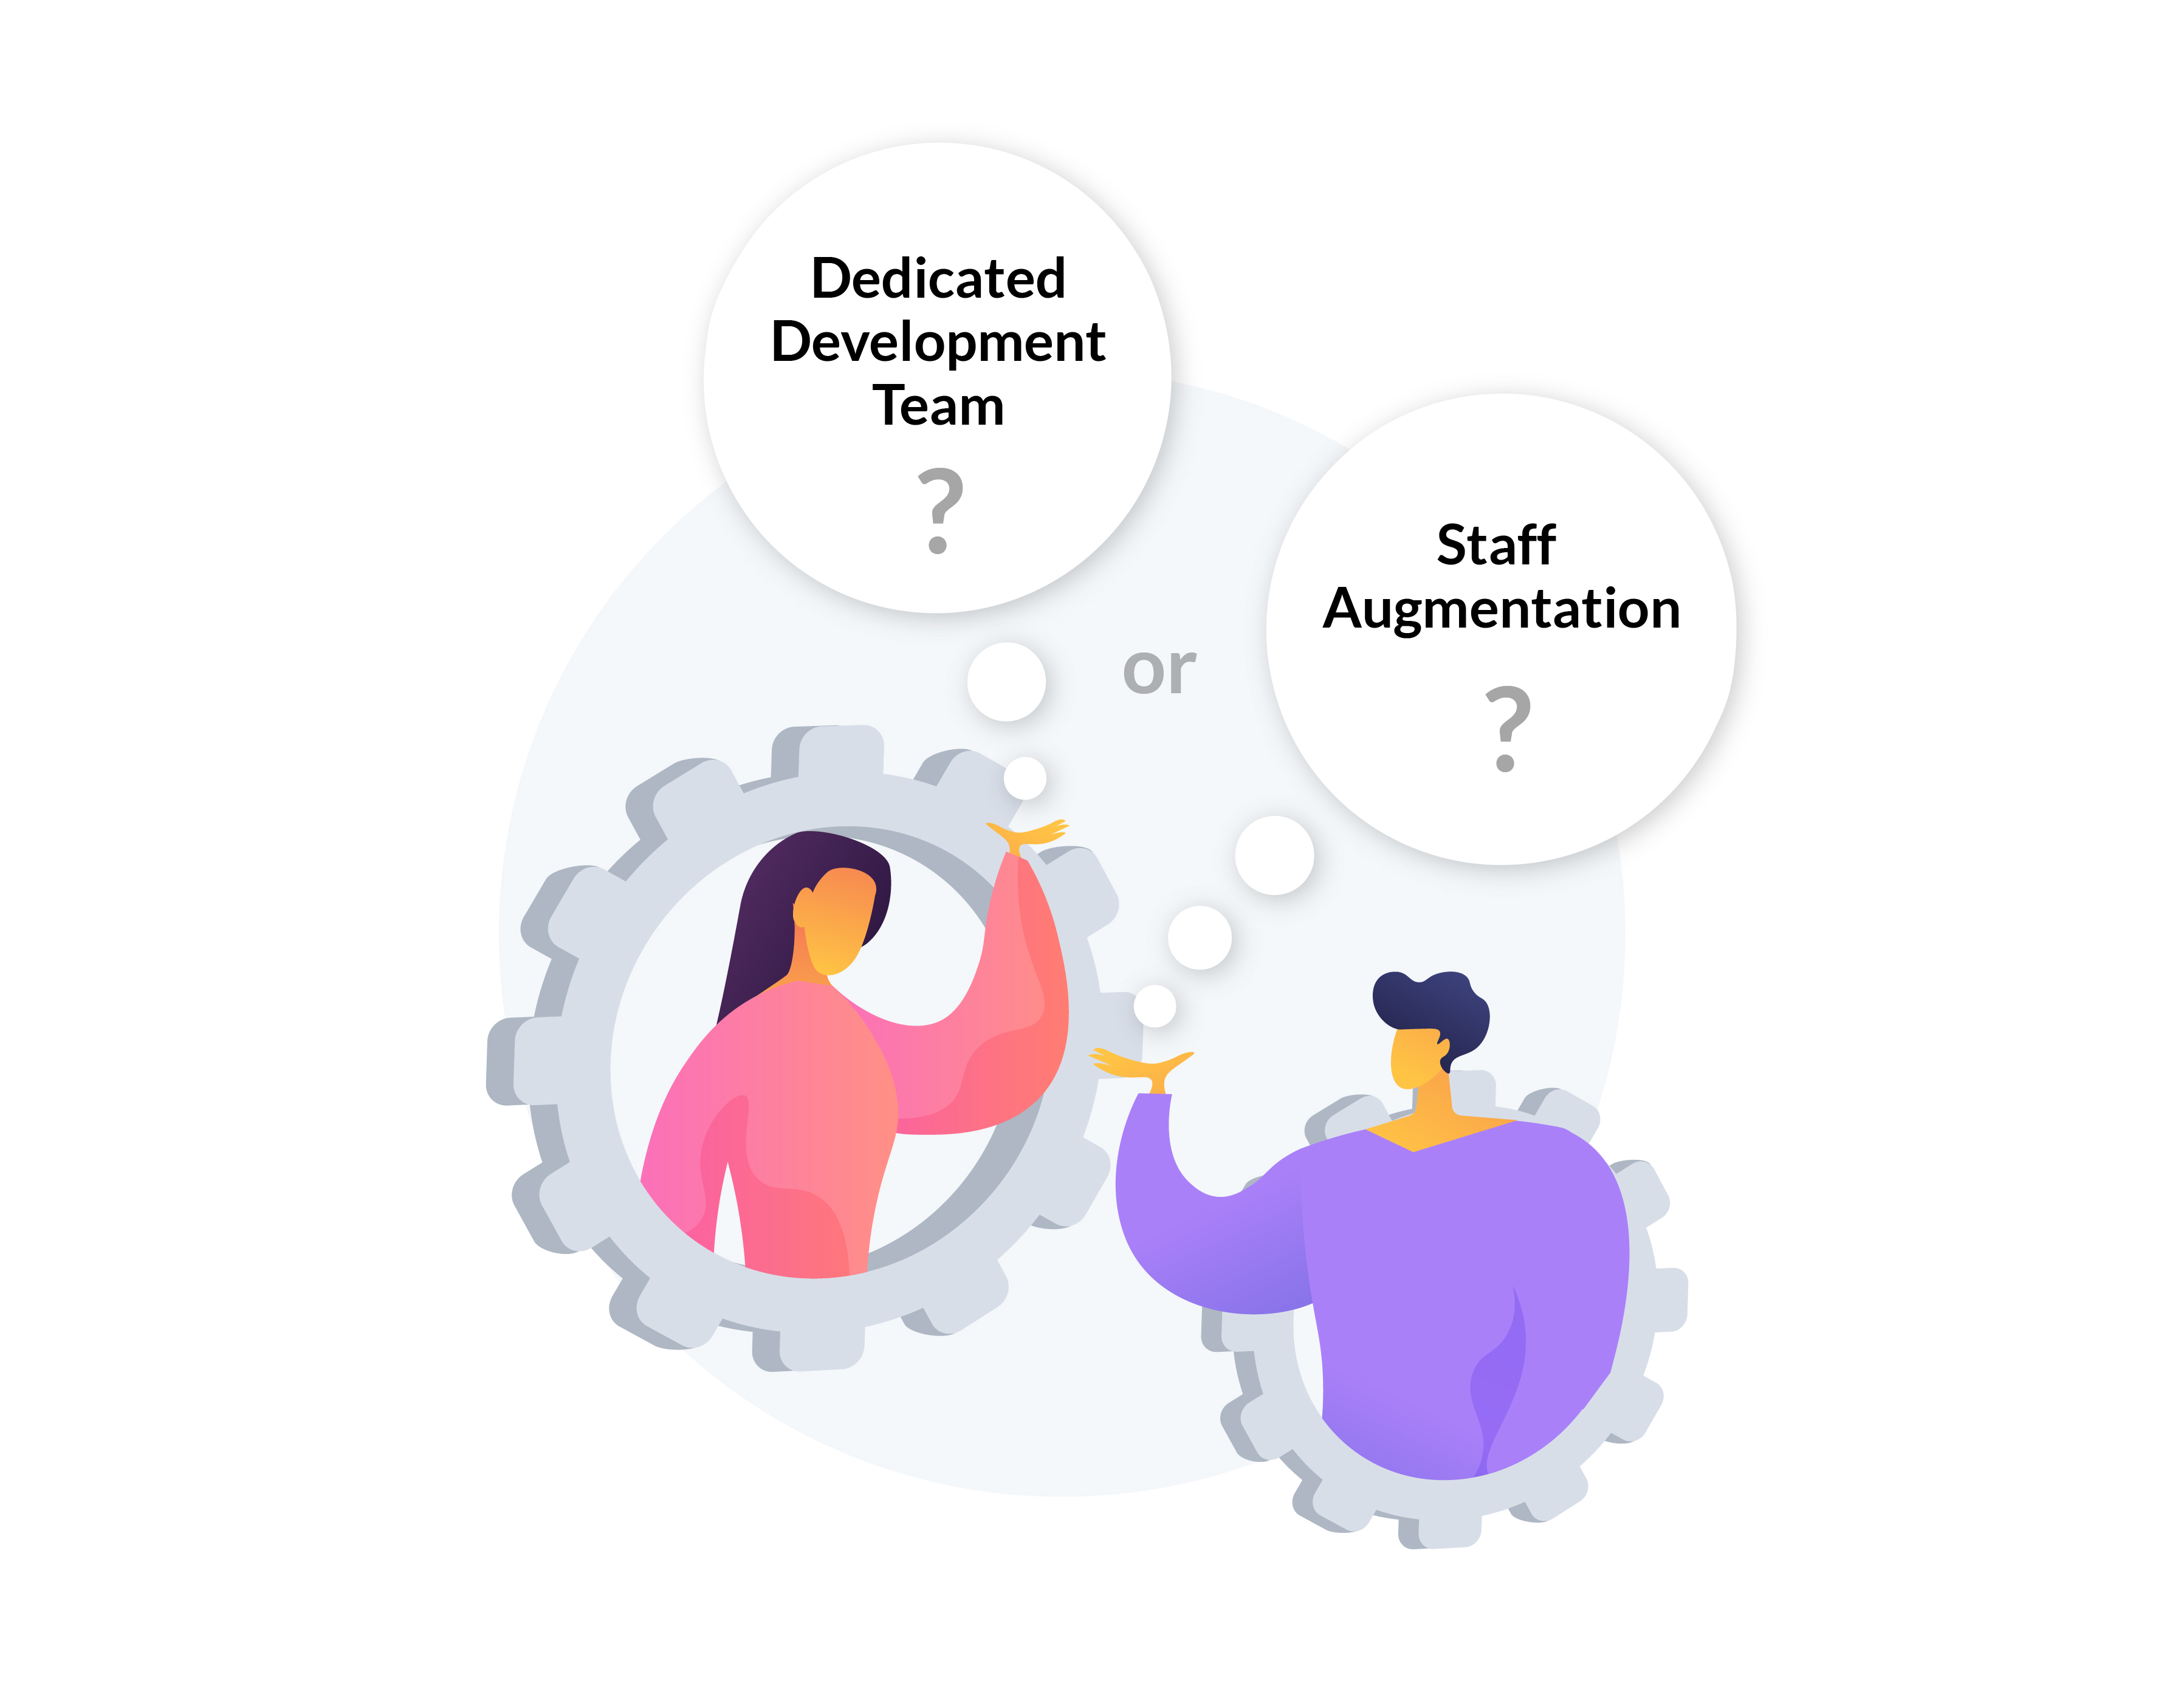 Dedicated Development Team or Staff Augmentation